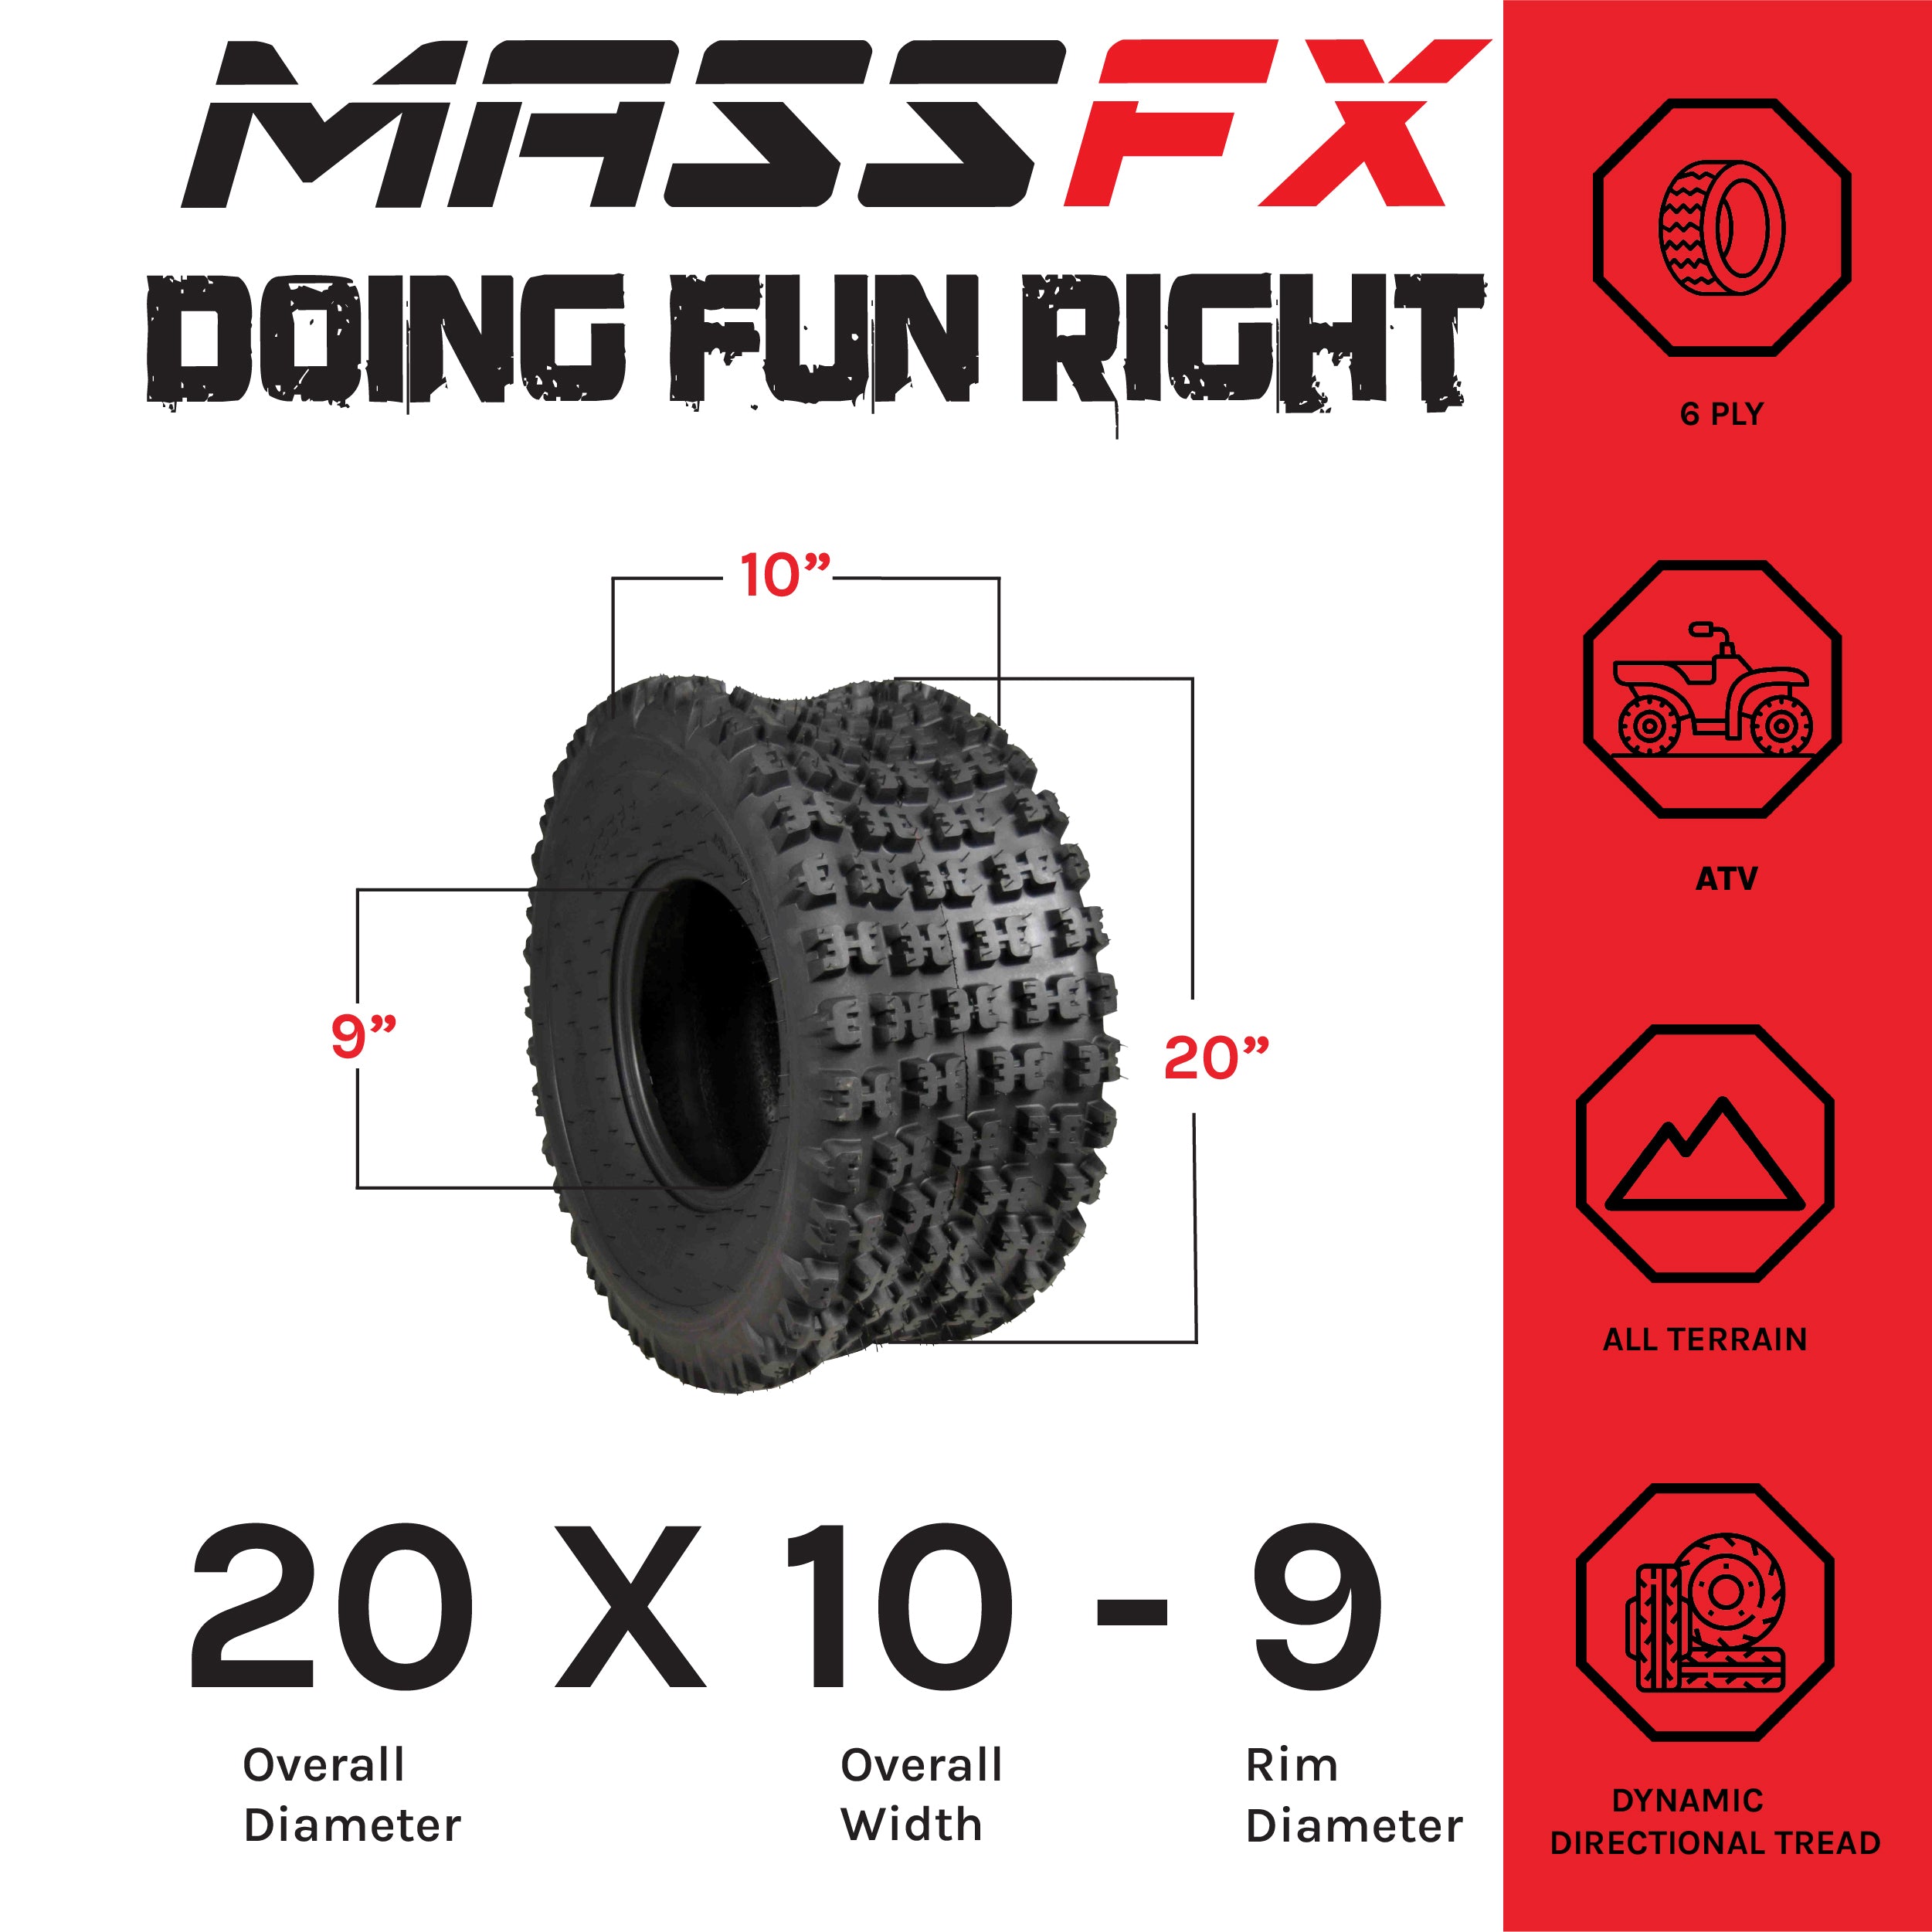 MASSFX 20x10-9 Rear Durable ATV Sport Tire 6 PLY 20x10x9 (2 Pack)